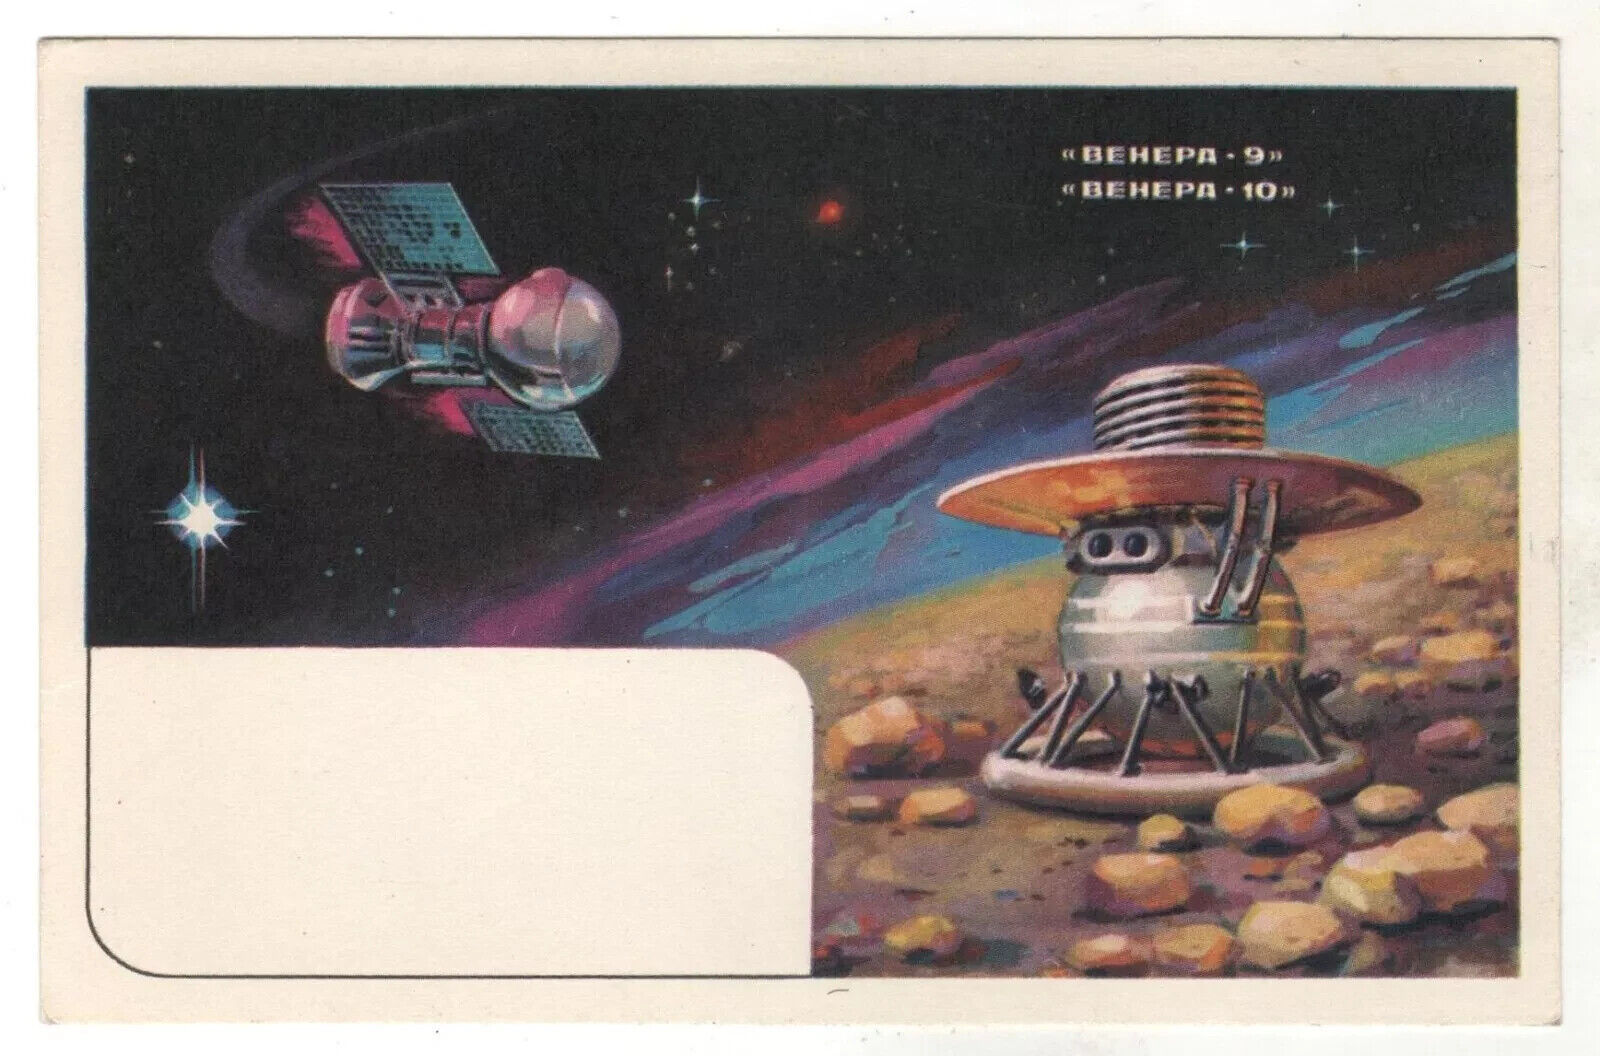 1970s QSL RADIO CARD Venera-9-10 Automatic station Cosmos Russian Postcard OLD